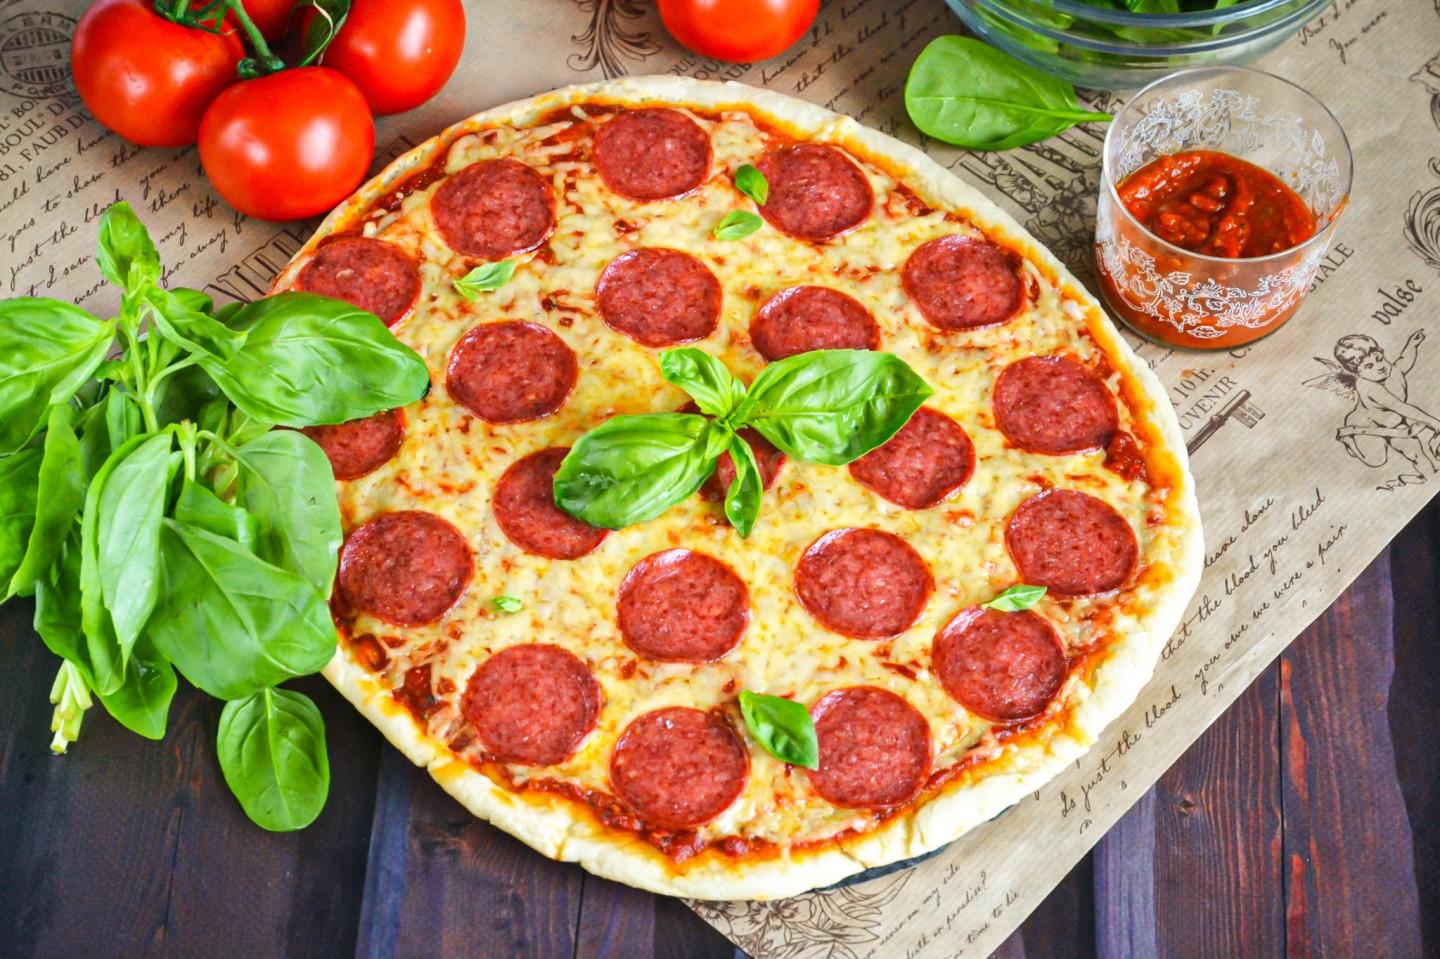 Пицца Пепперони в домашних условиях рецепт с фото пошагово и видео -  1000.menu